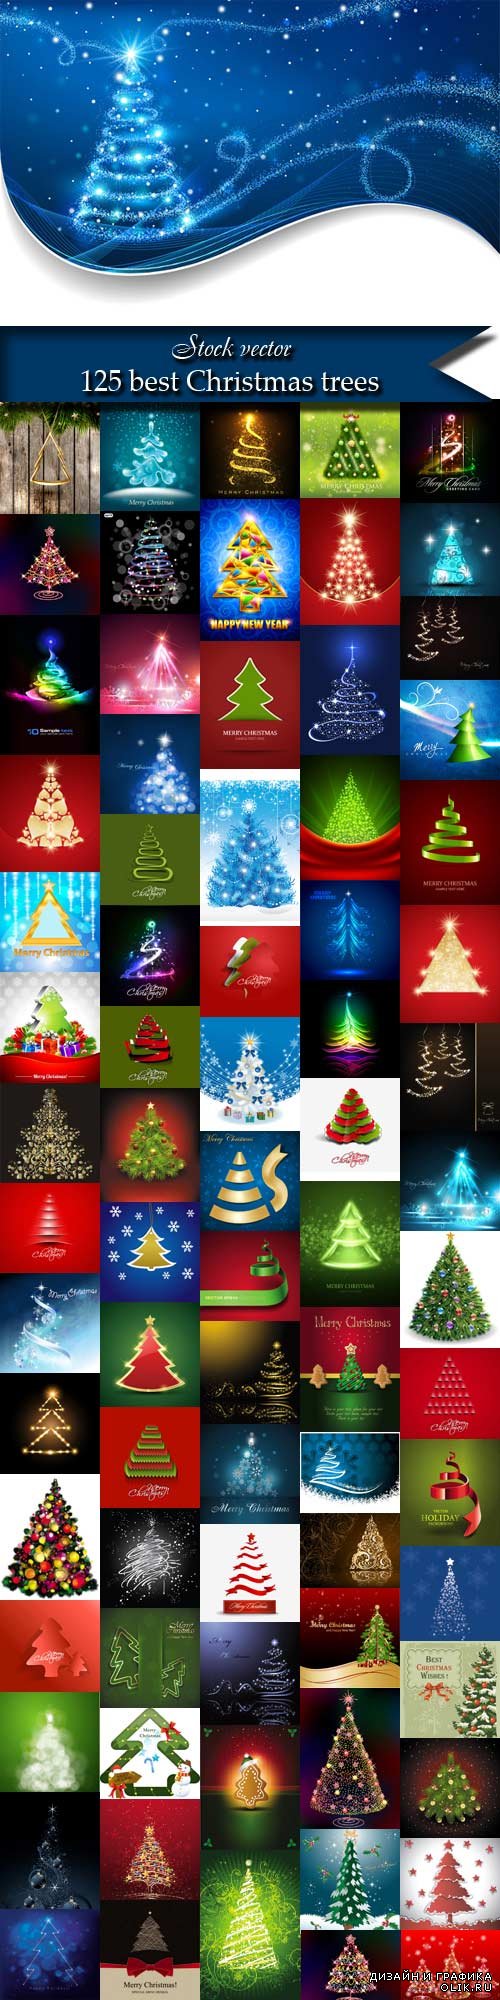 125 best Christmas trees